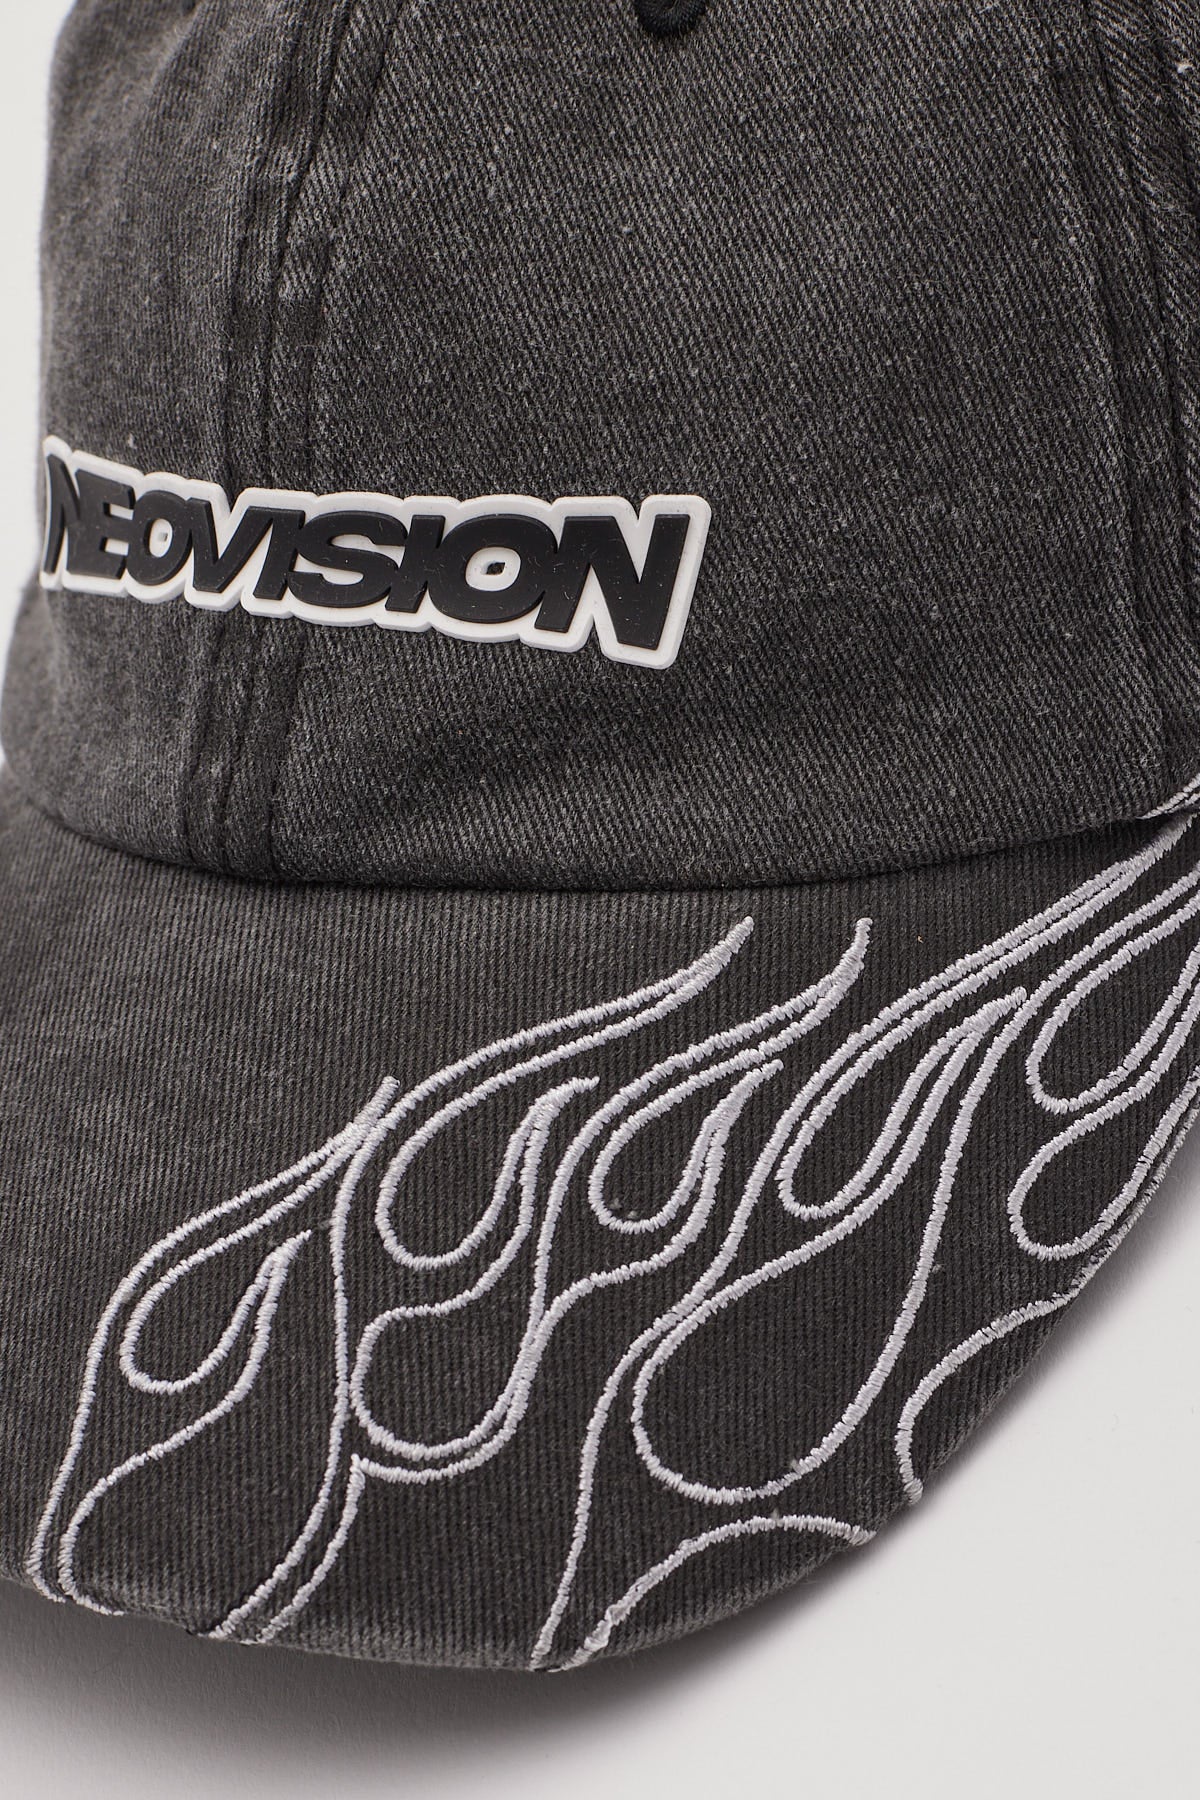 Neovision Twin Turbo Dad Cap Washed Black